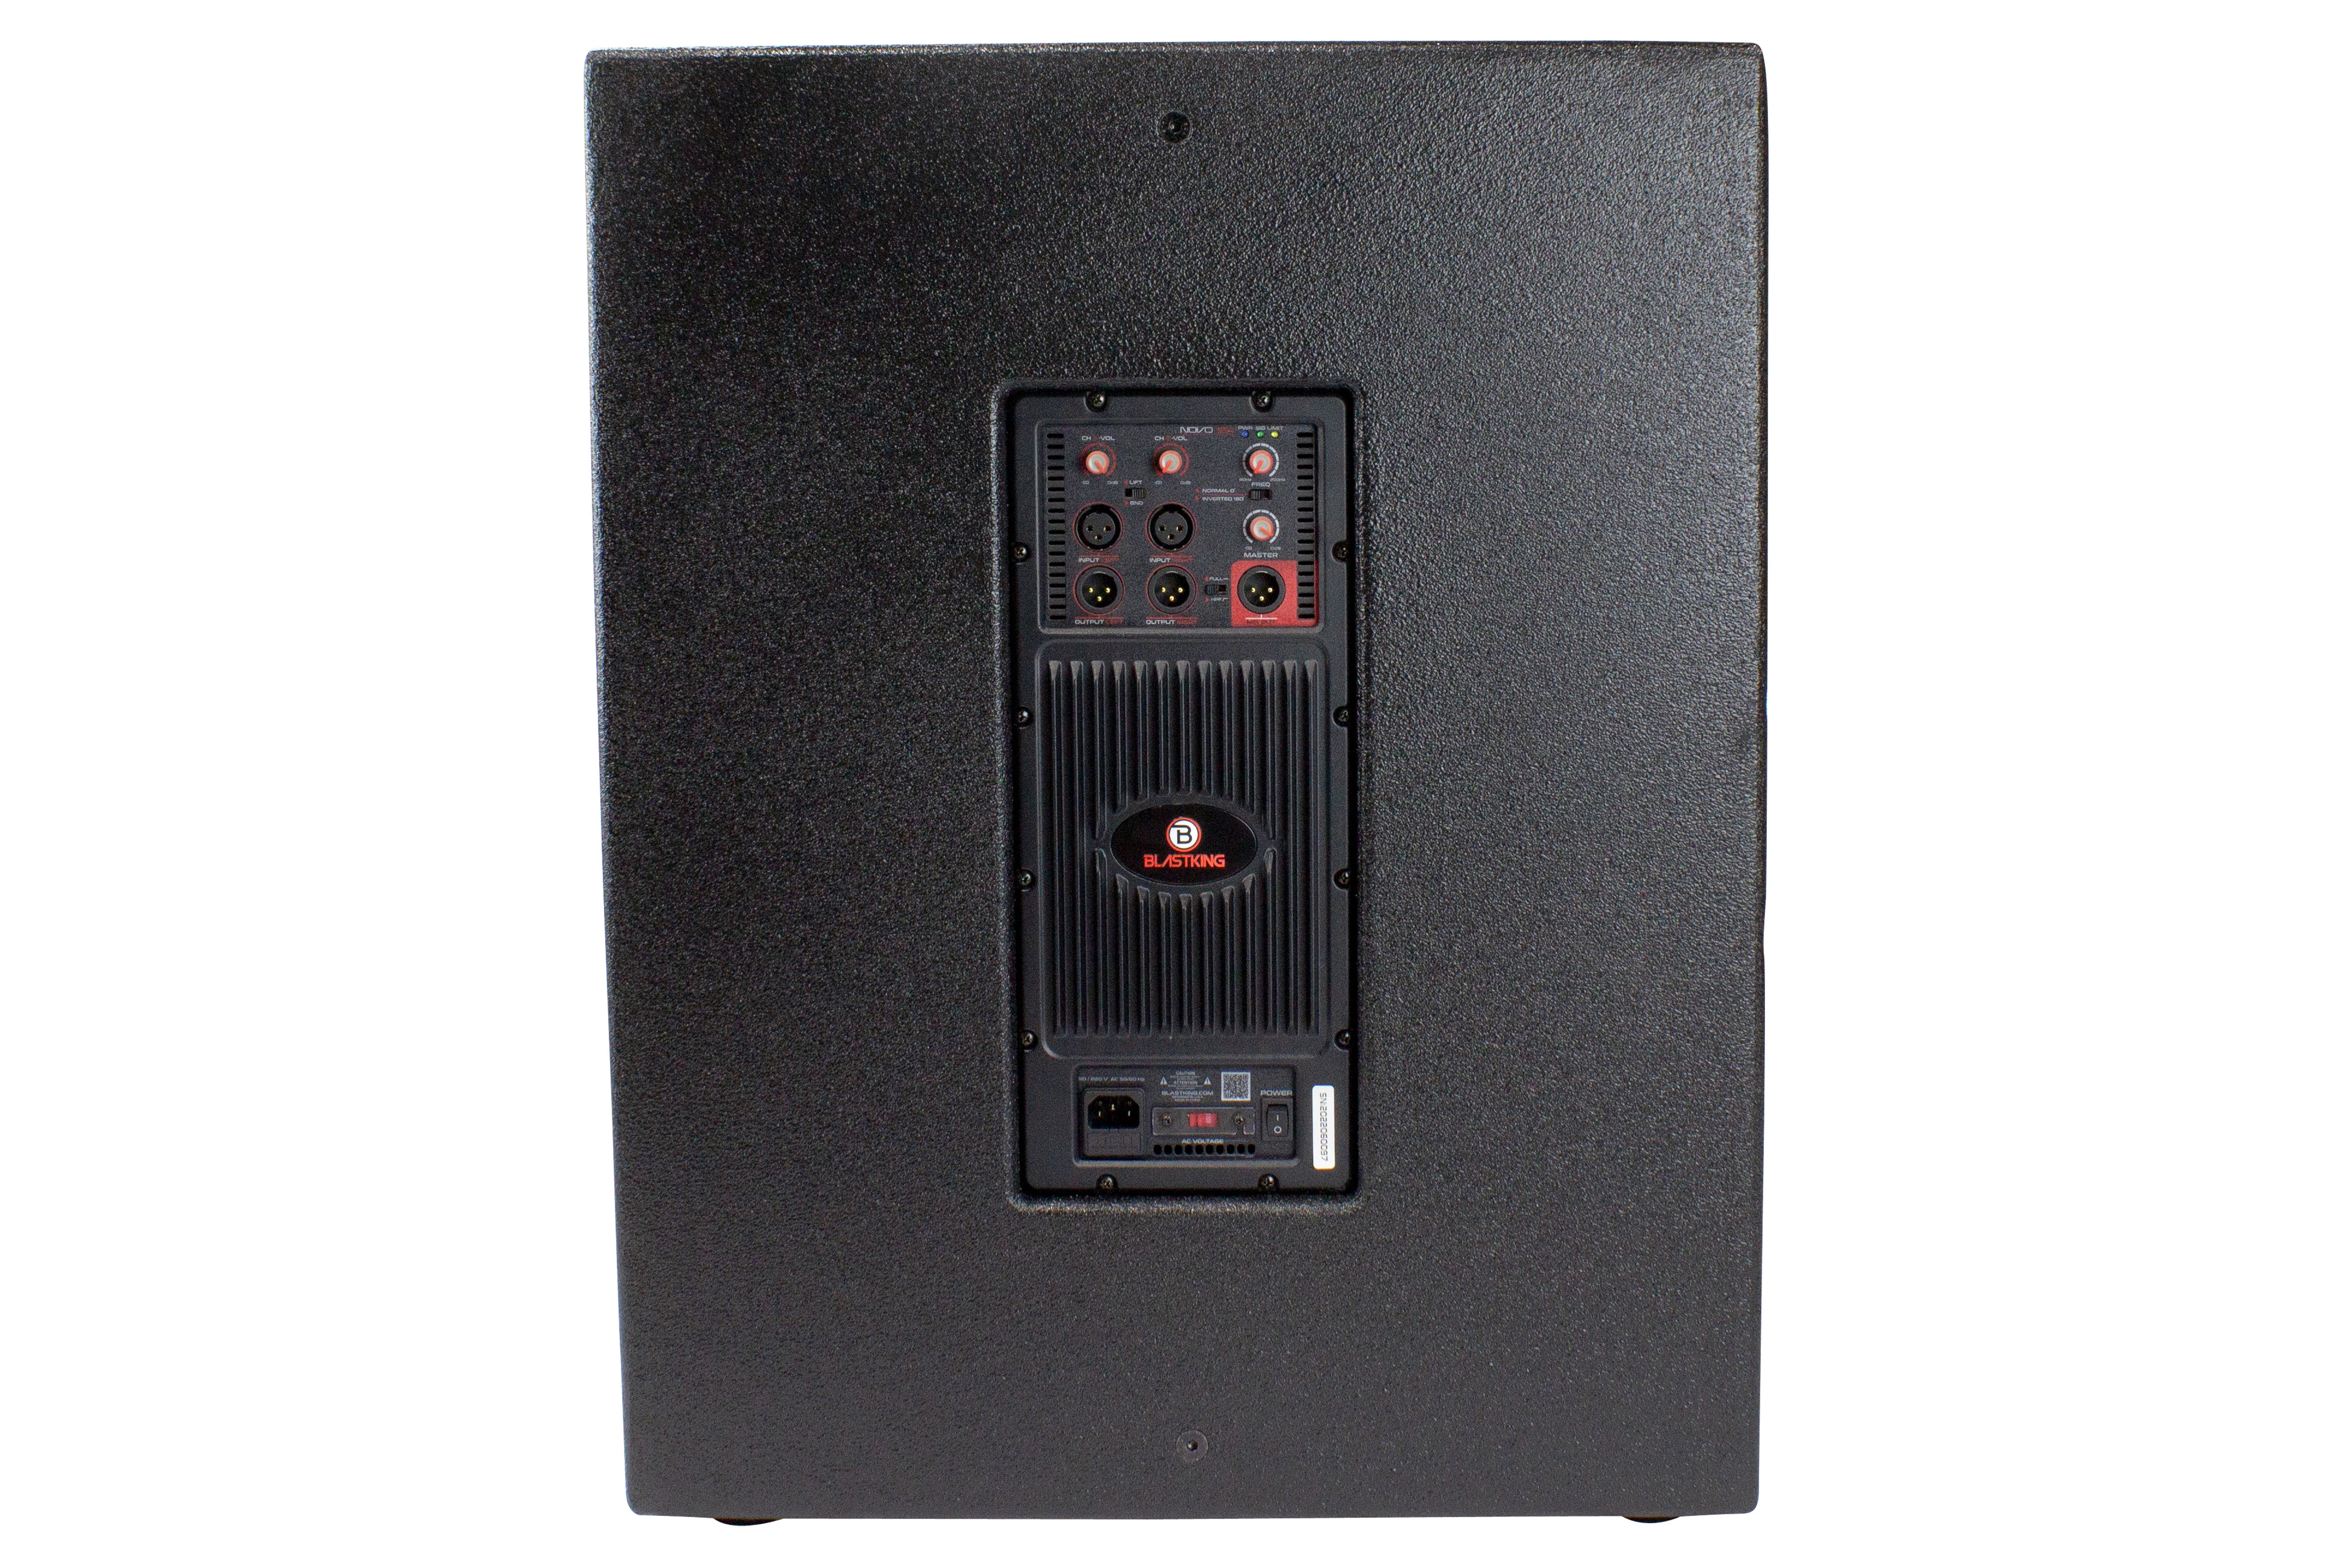 Blastking Subwoofer NOVO-P18A 18" Active Speaker Box